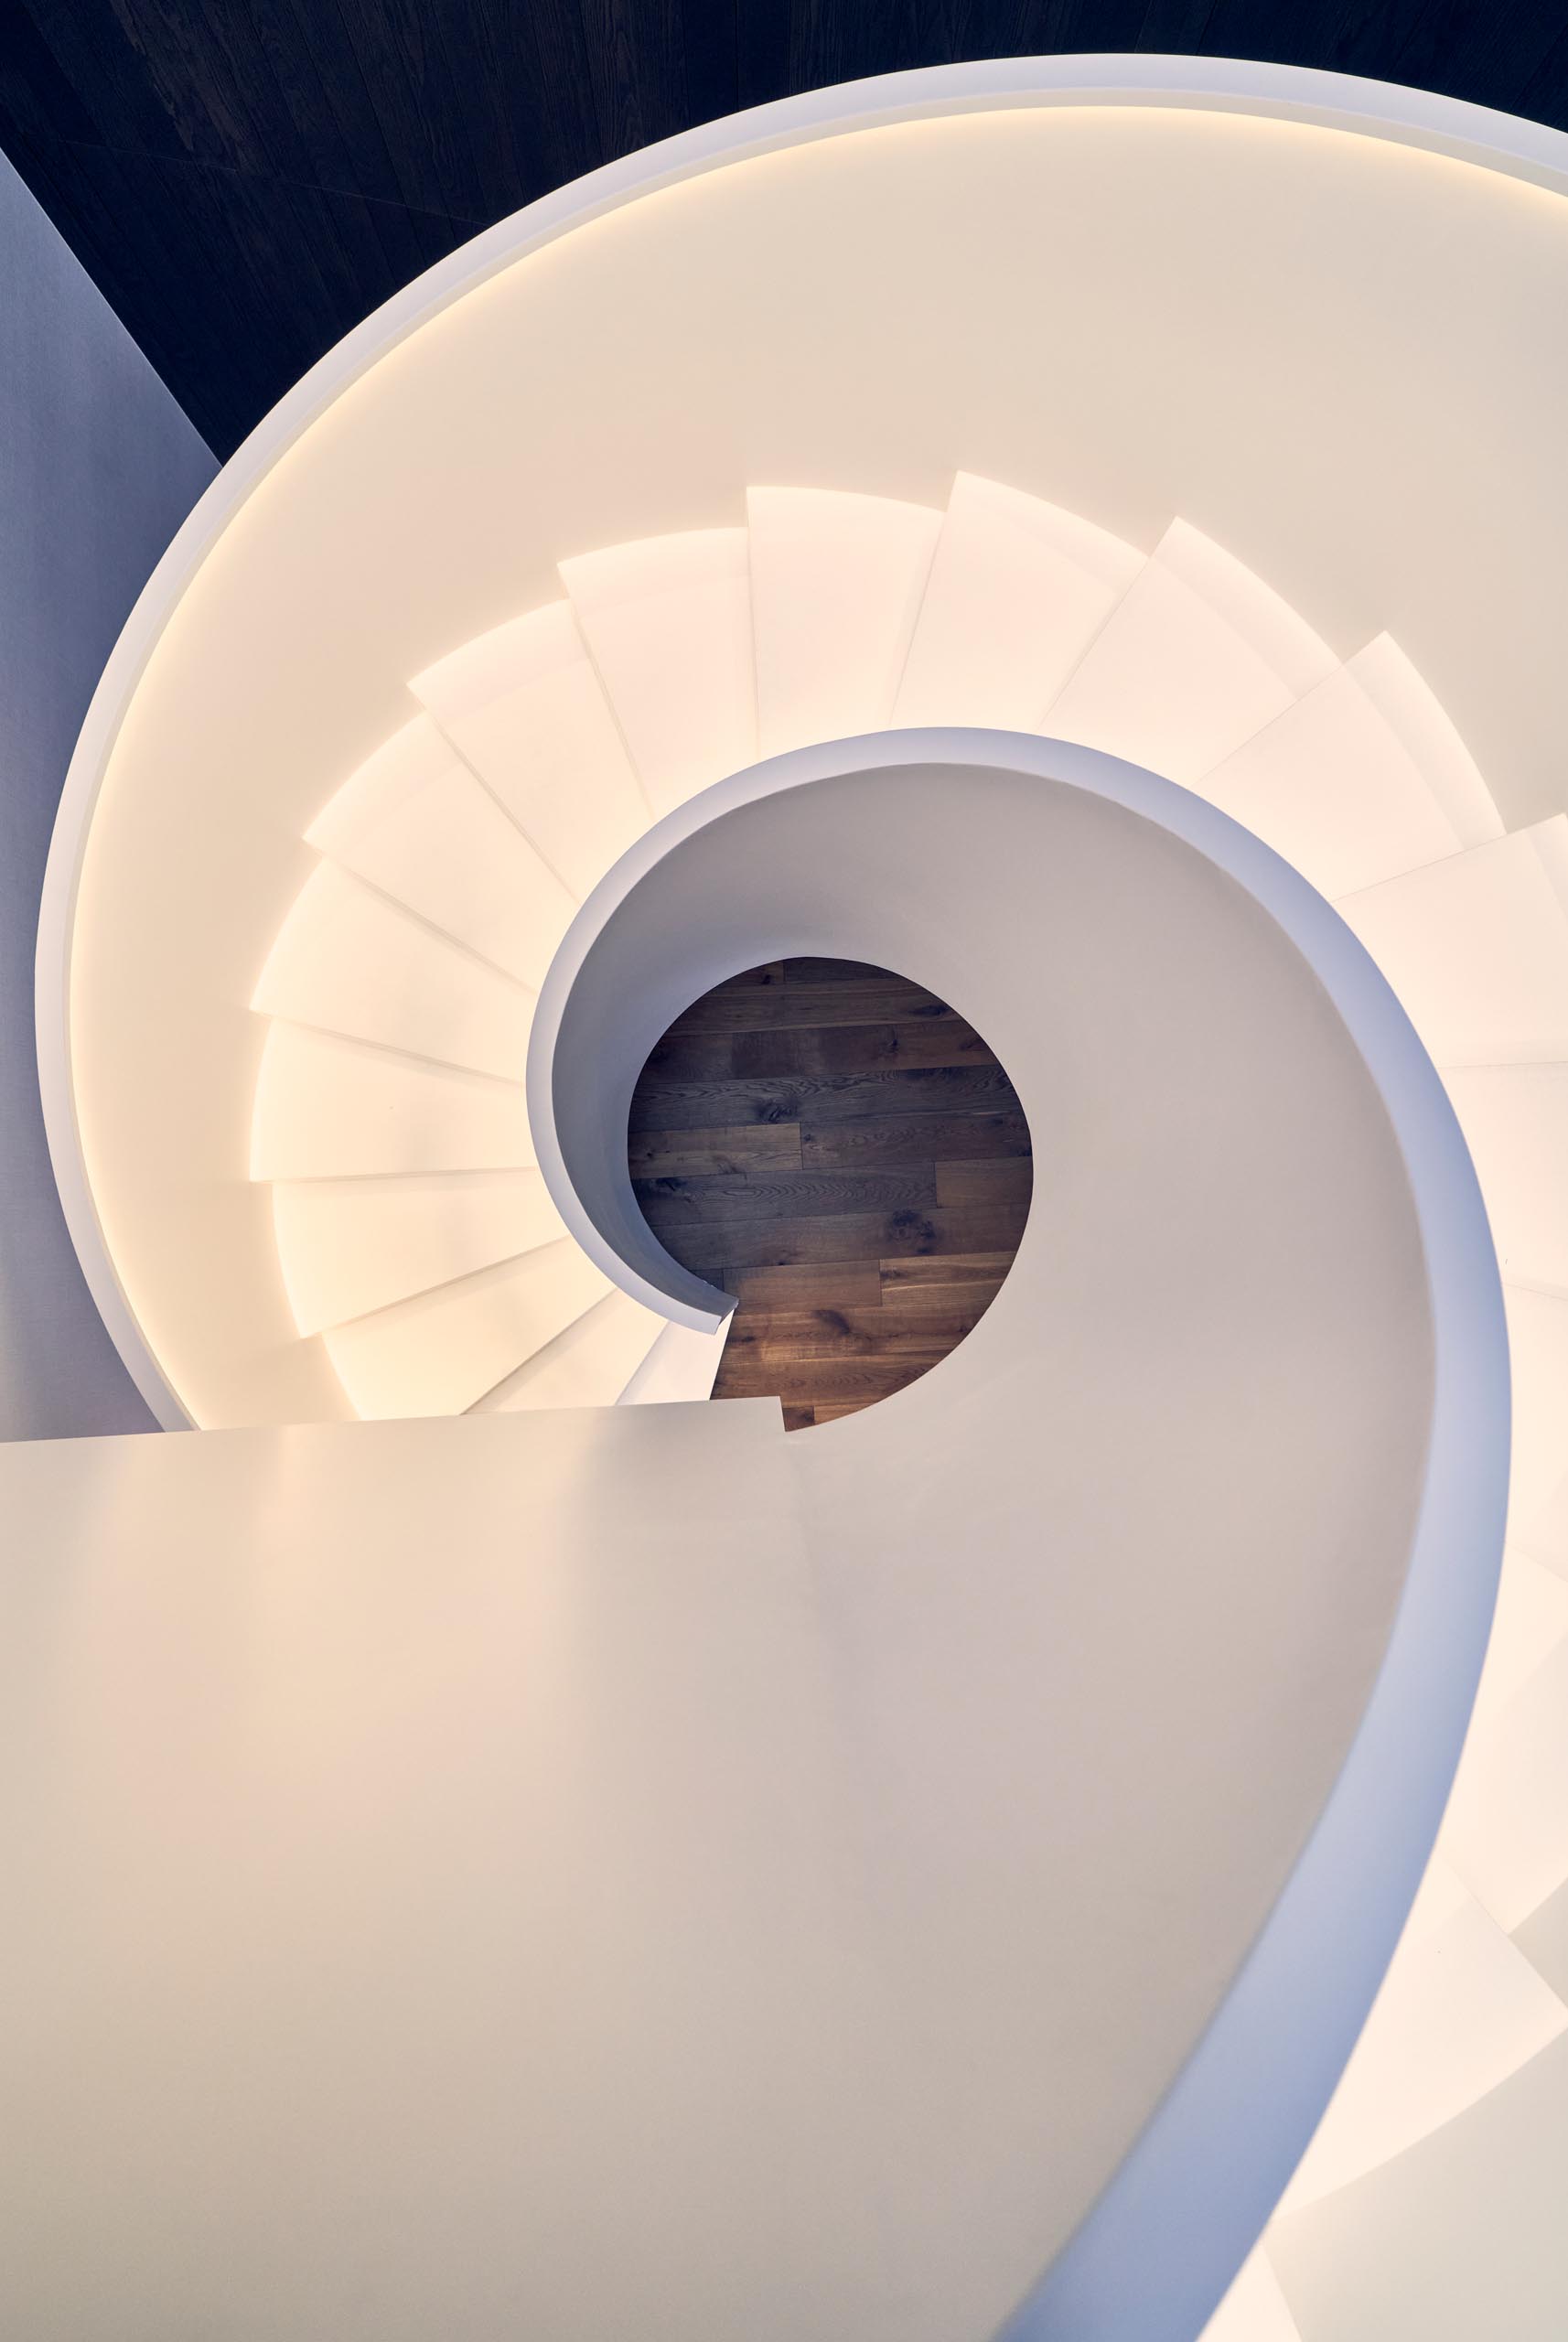 Modern white spiral stairs with hidden lighting.